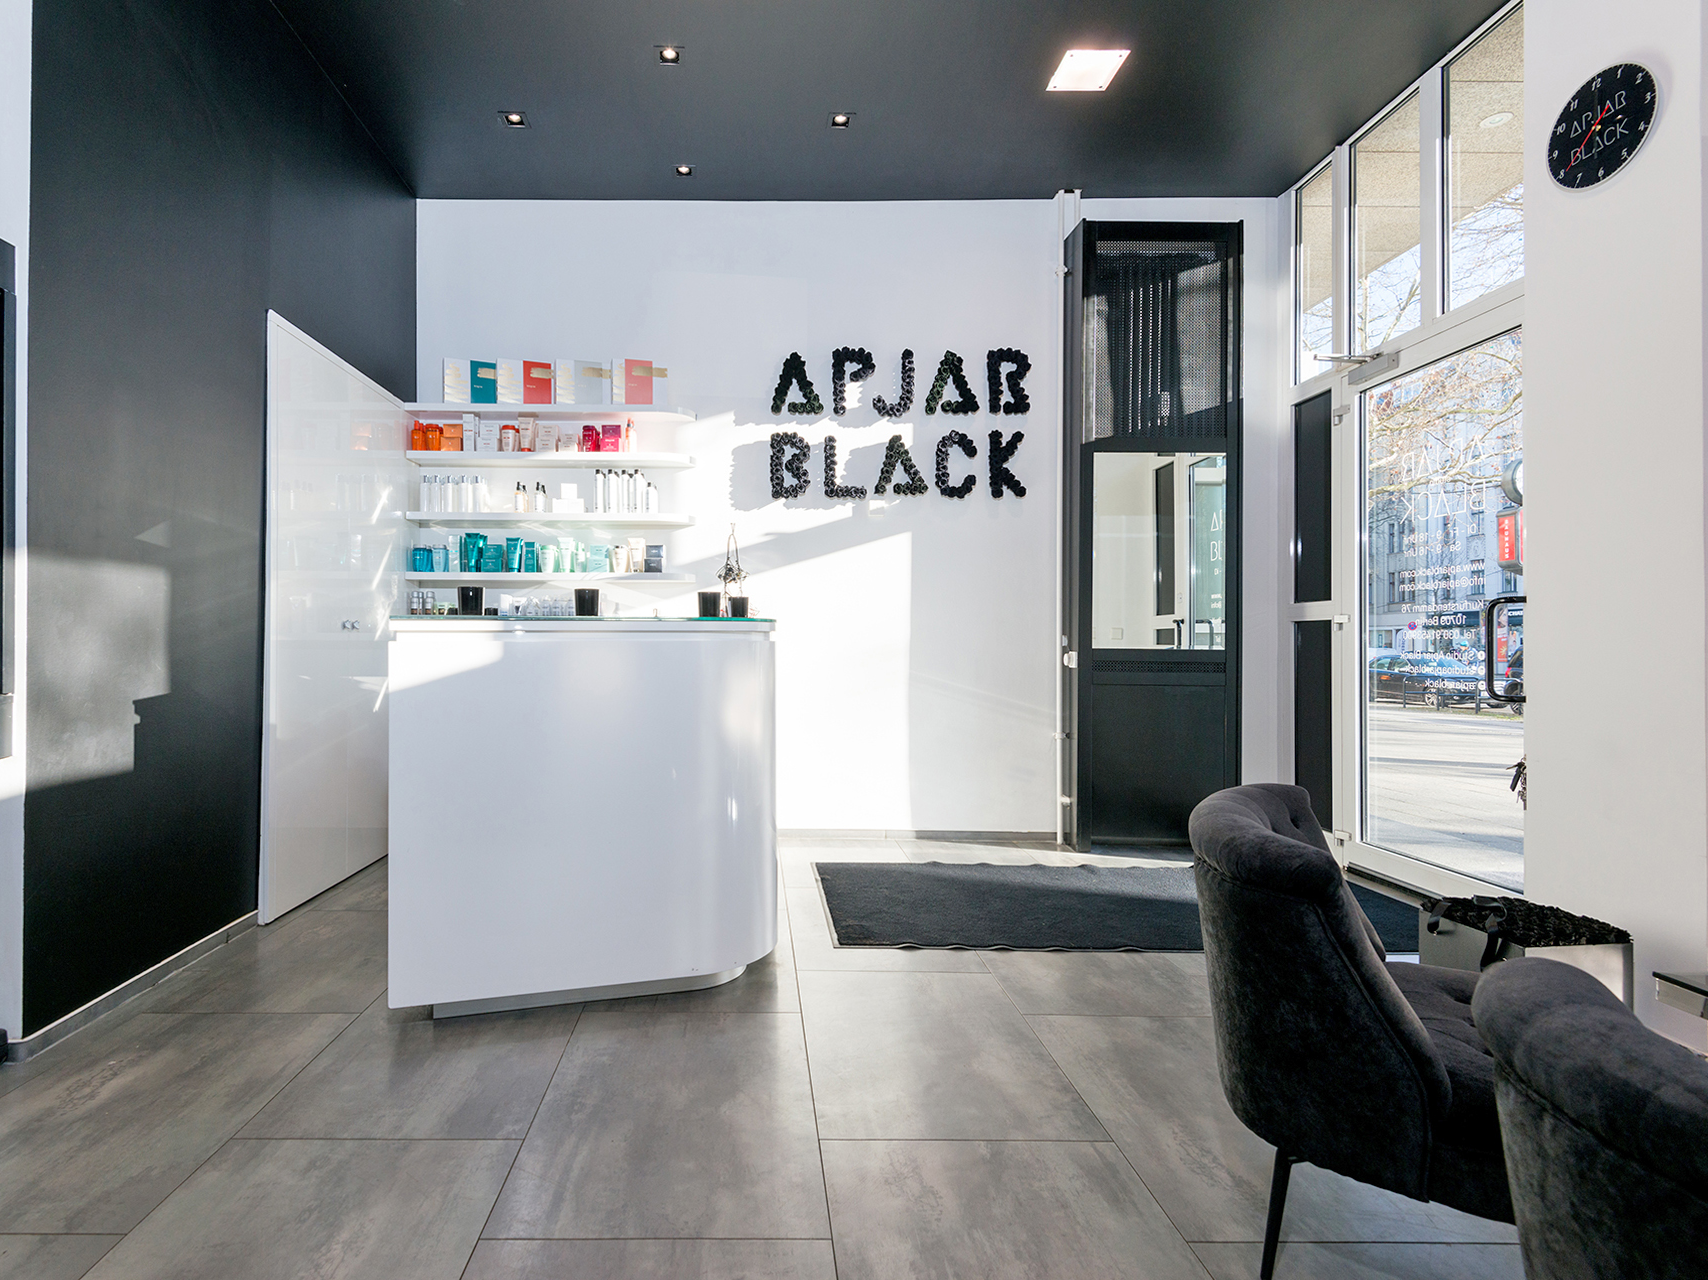 Studio Apjar Black, Kurfürstendamm 76 in Berlin